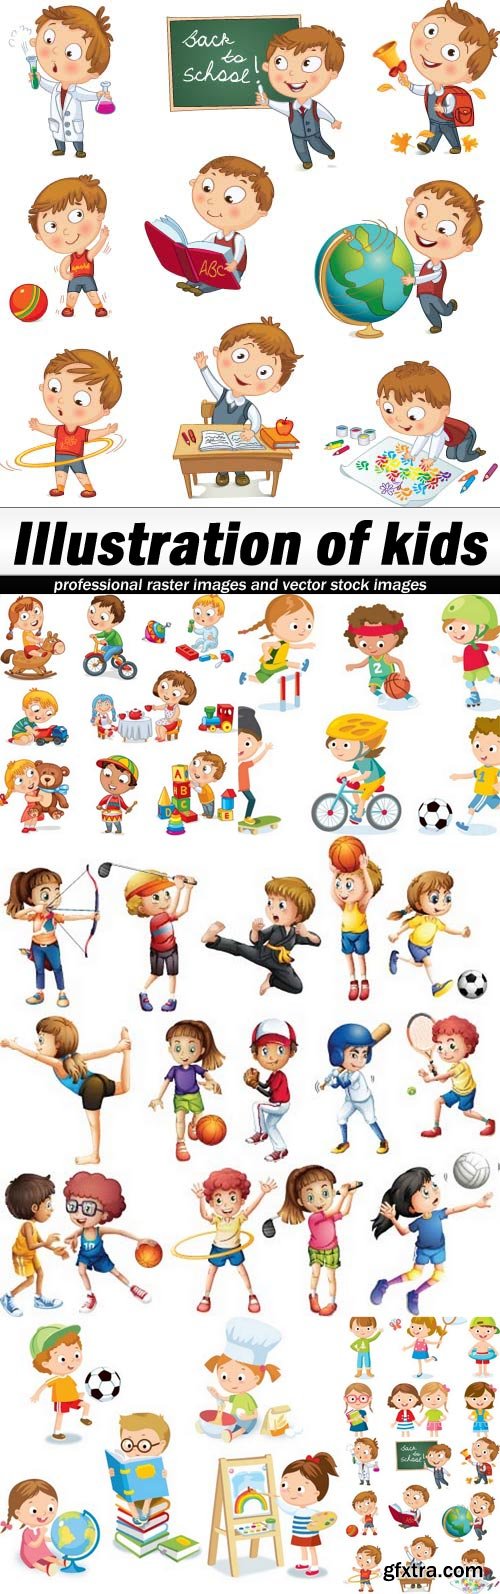 Illustration of kids